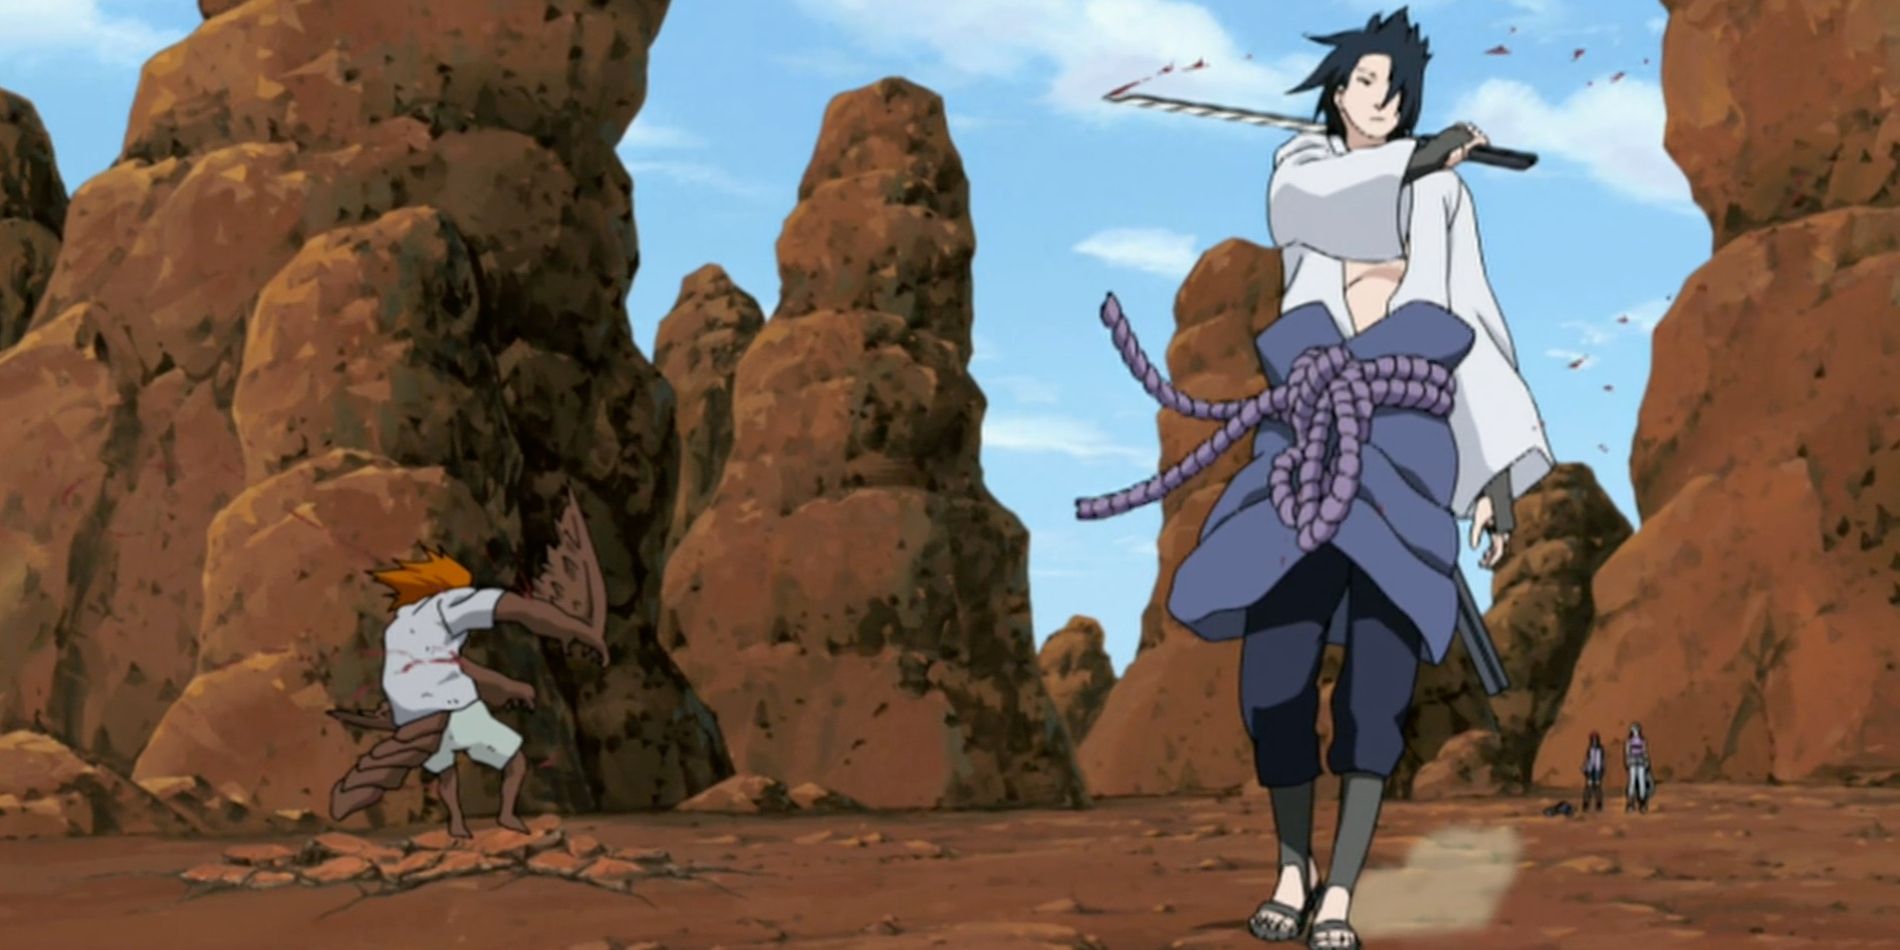 Sasuke attacks with his sword